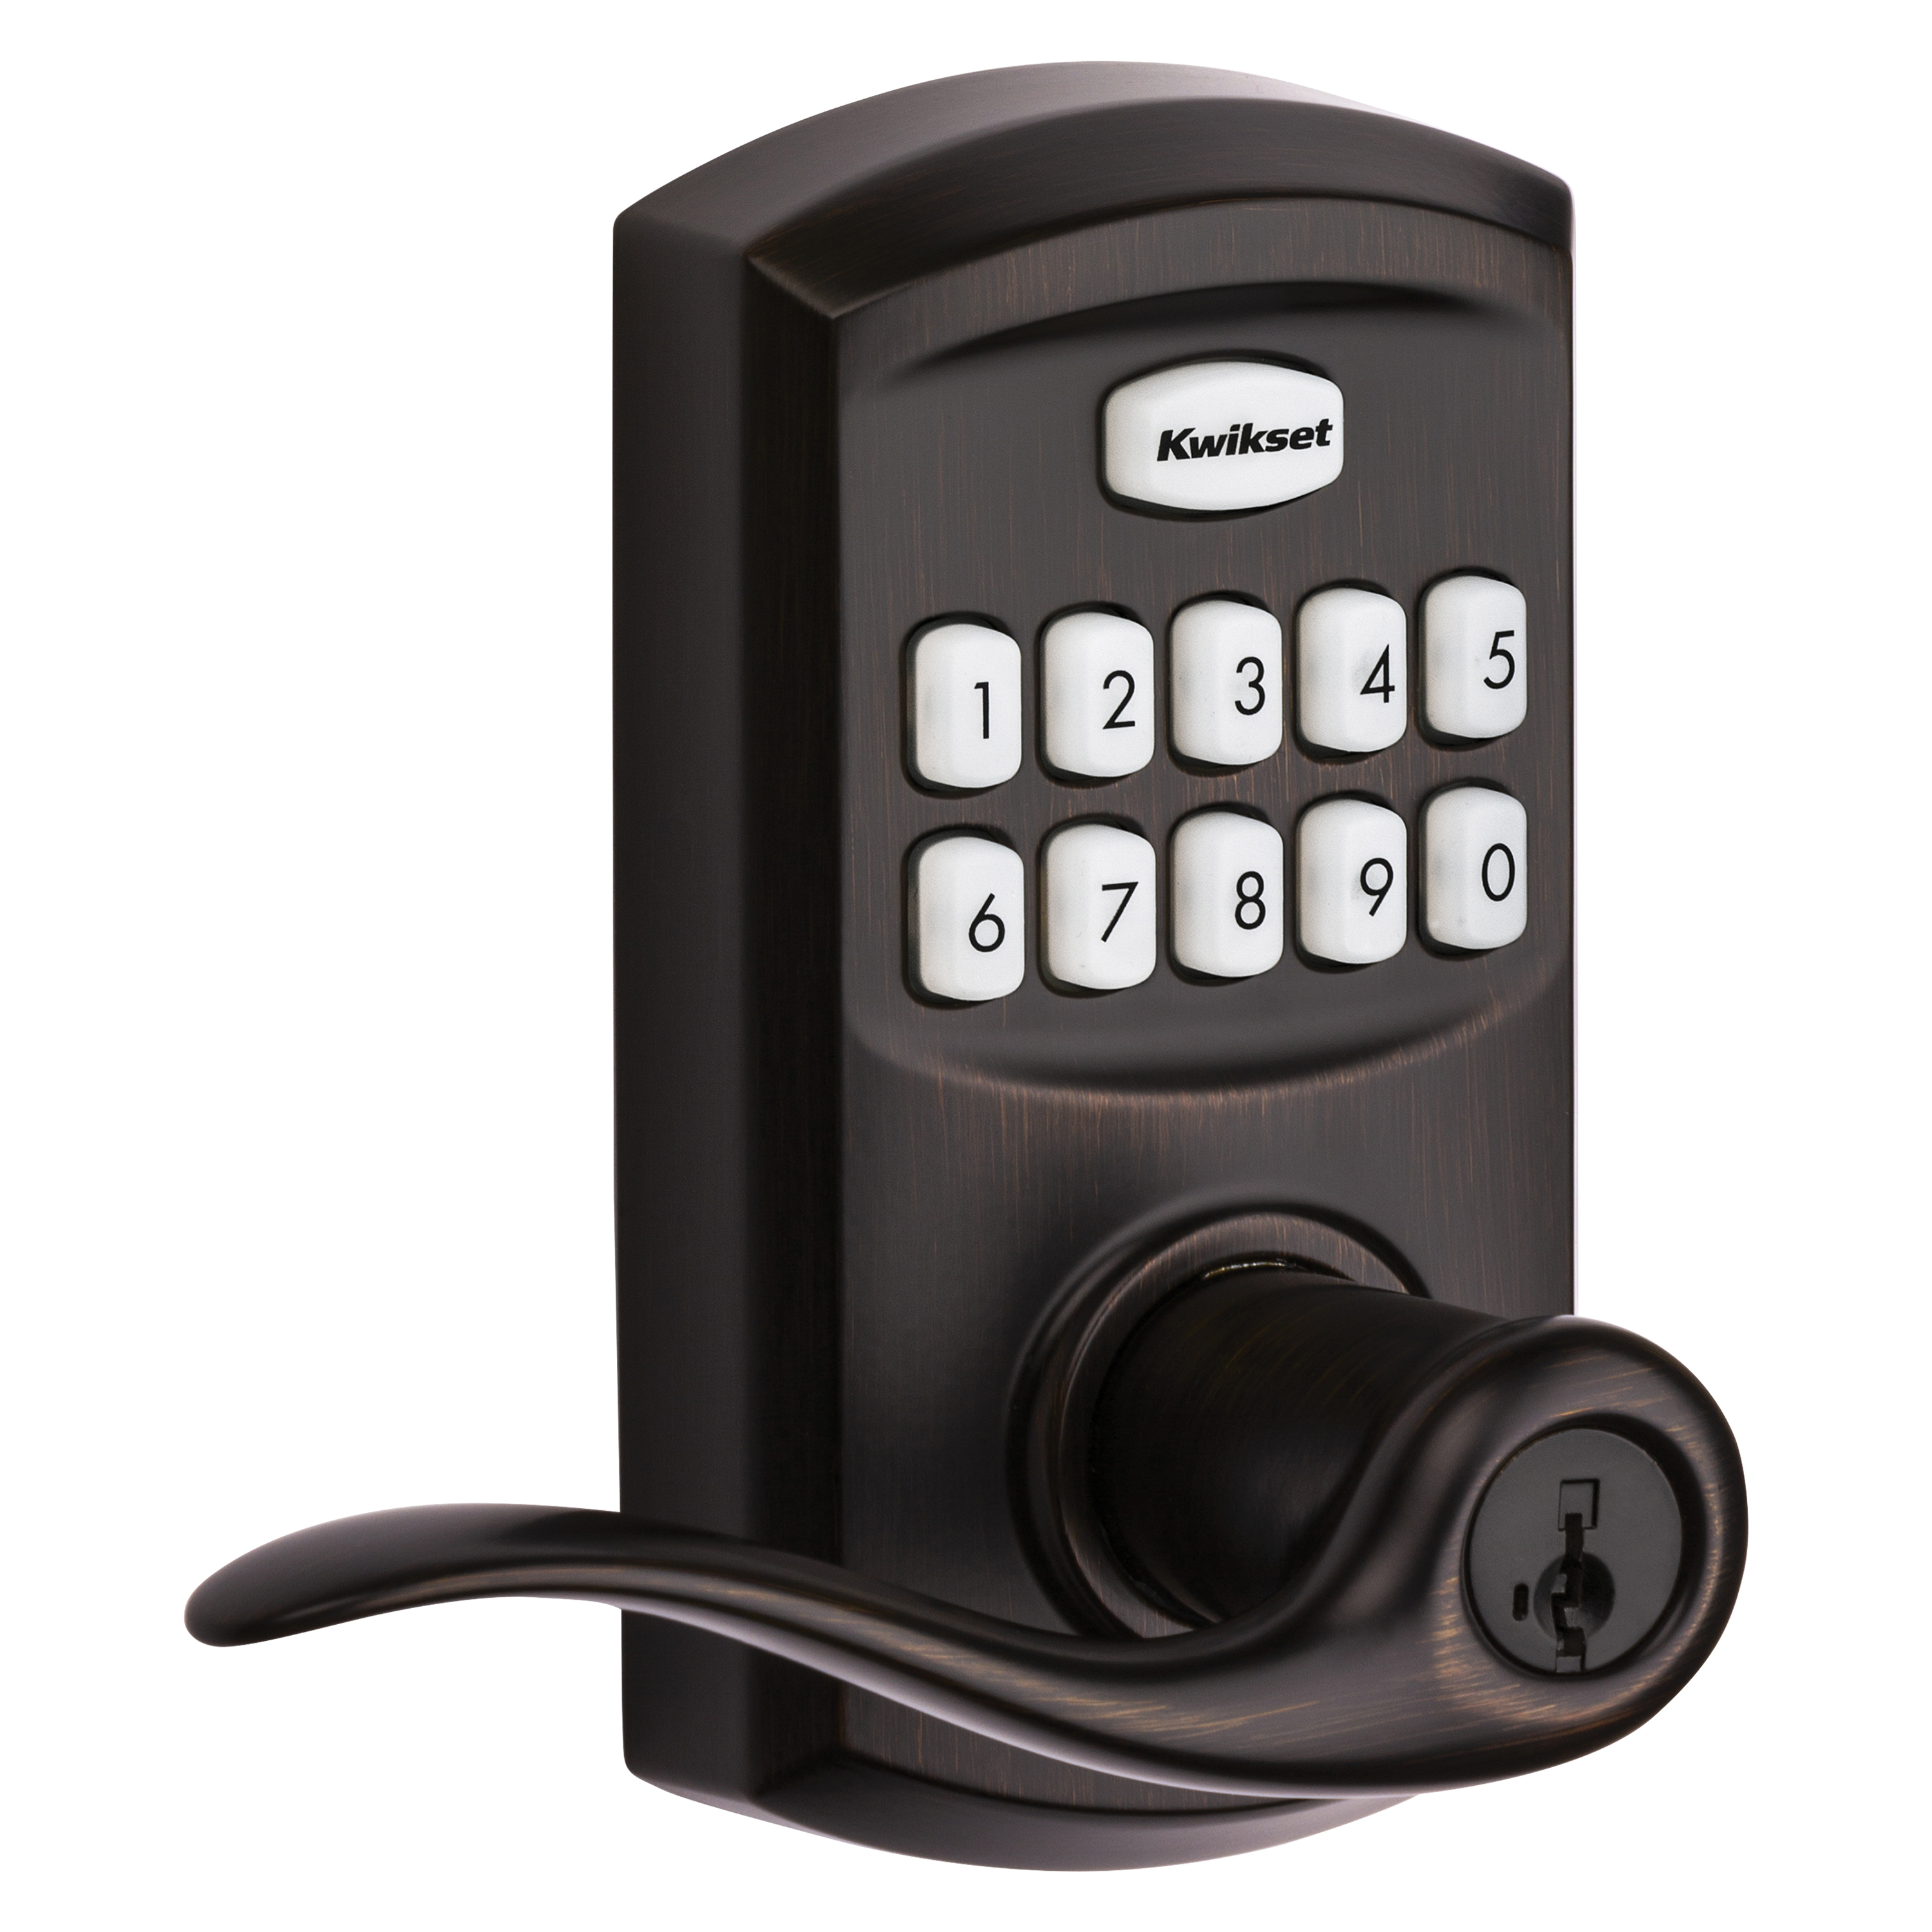 Kwikset 911TNL 11P SMT Electronic Entry Lock, Venetian Bronze, Residential, Metal, Reversible Hand